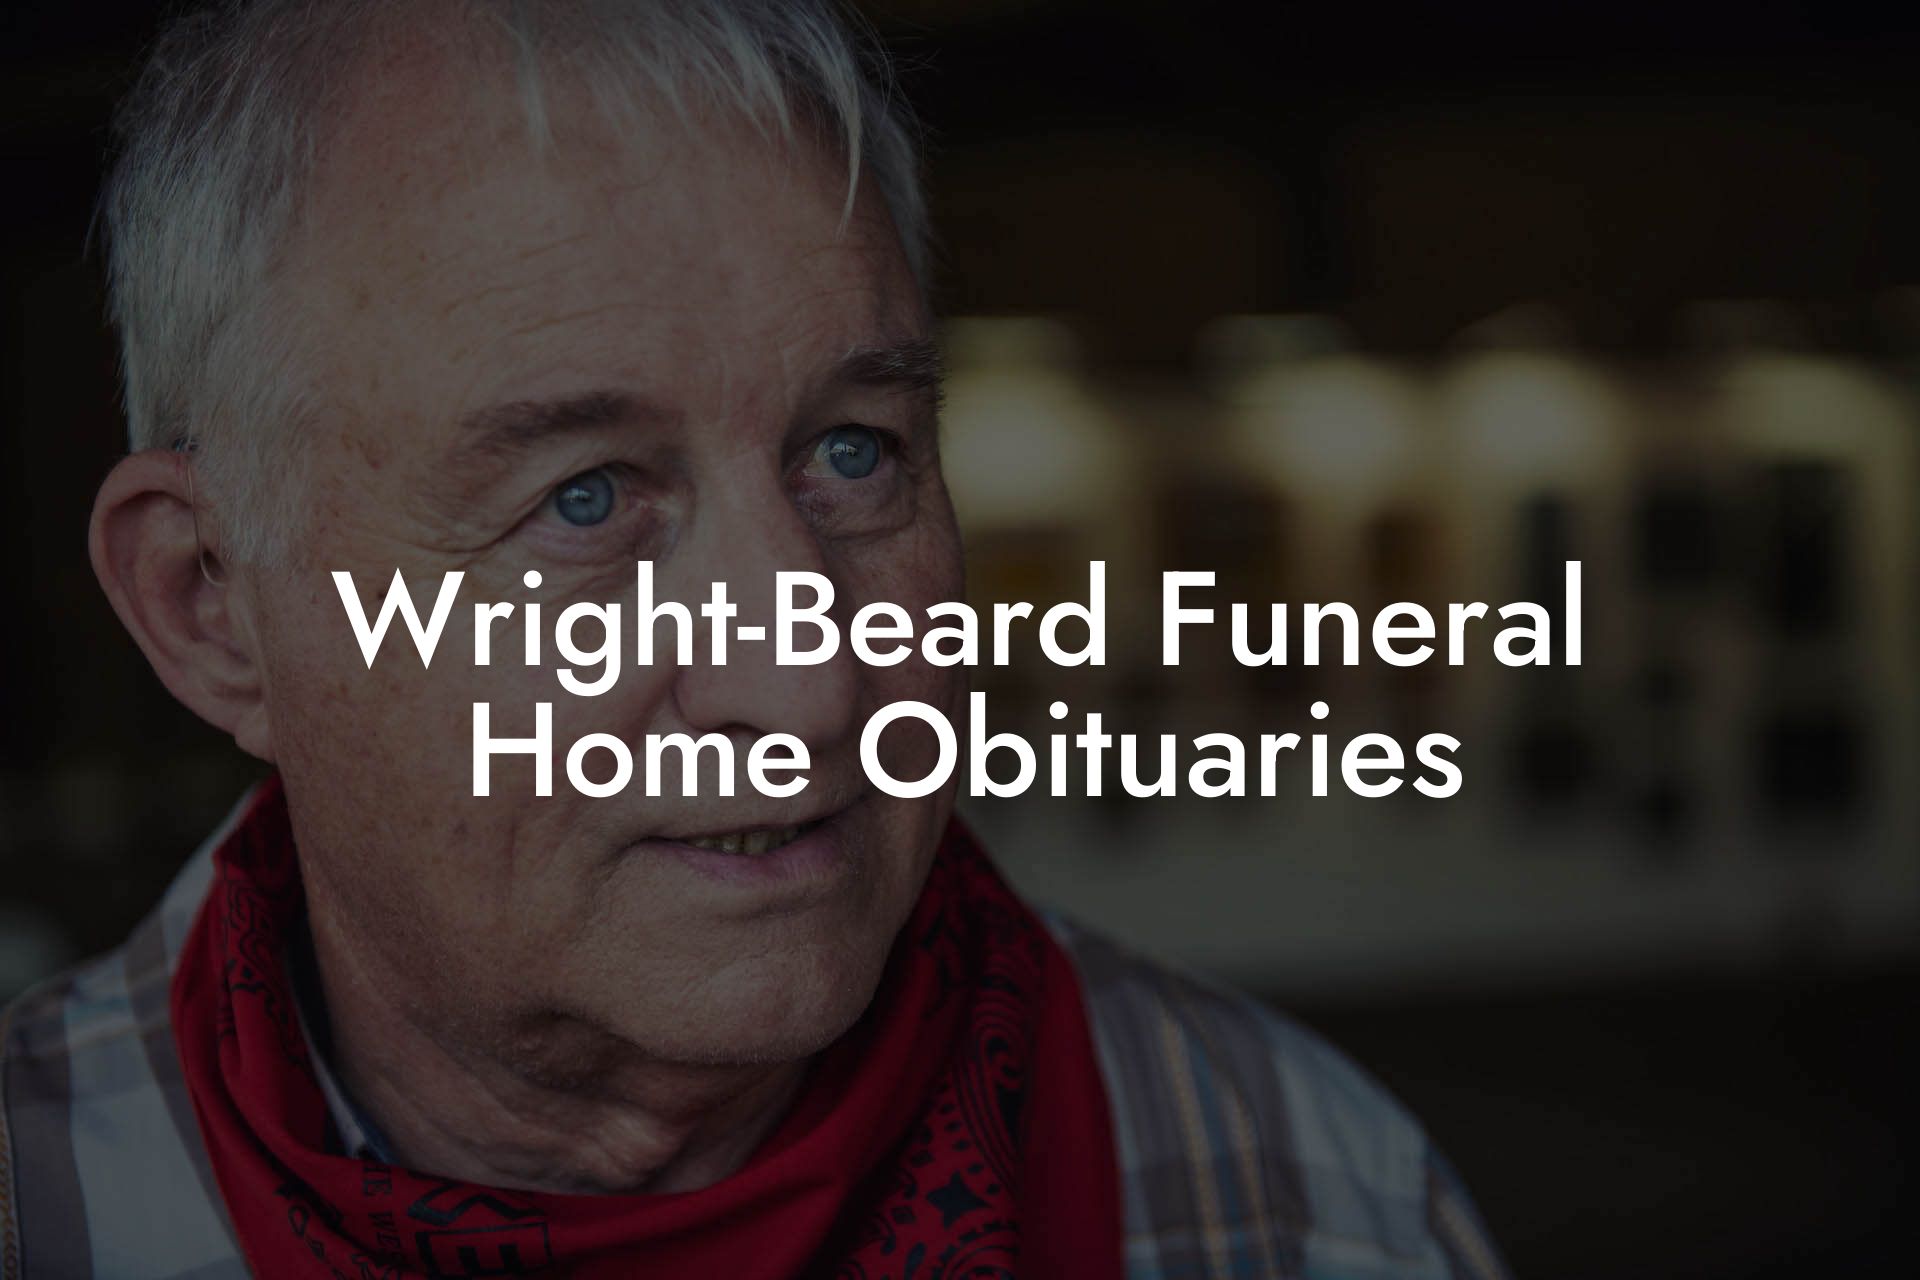 Wright-Beard Funeral Home Obituaries